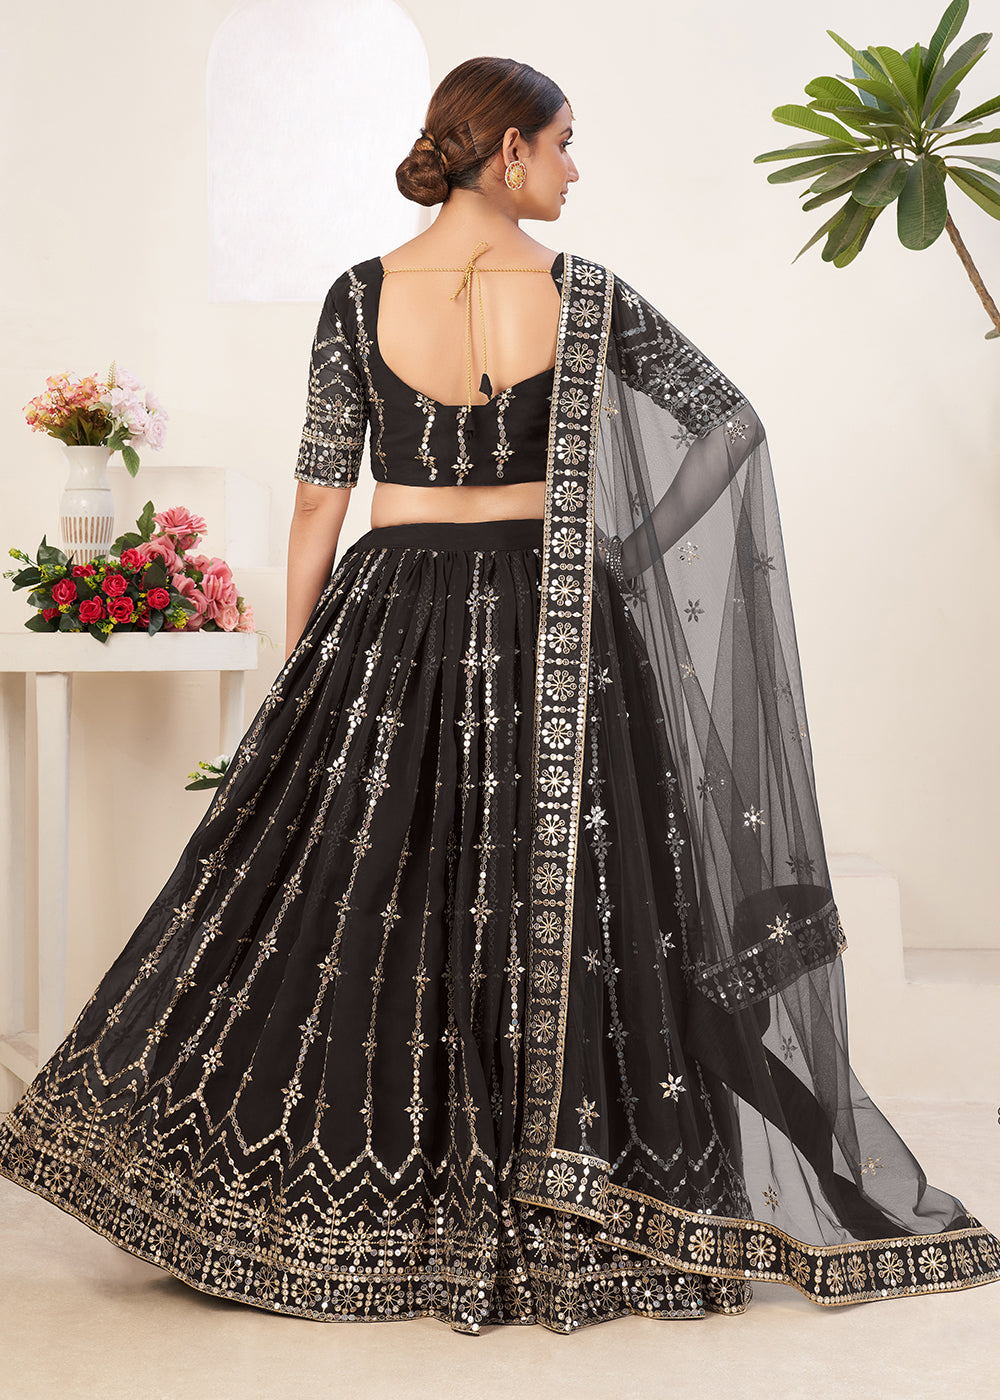 Buy Now Charming Black Bordered Sequins Sangeet Wear Lehenga Choli Online in USA, UK, Canada & Worldwide at Empress Clothing.